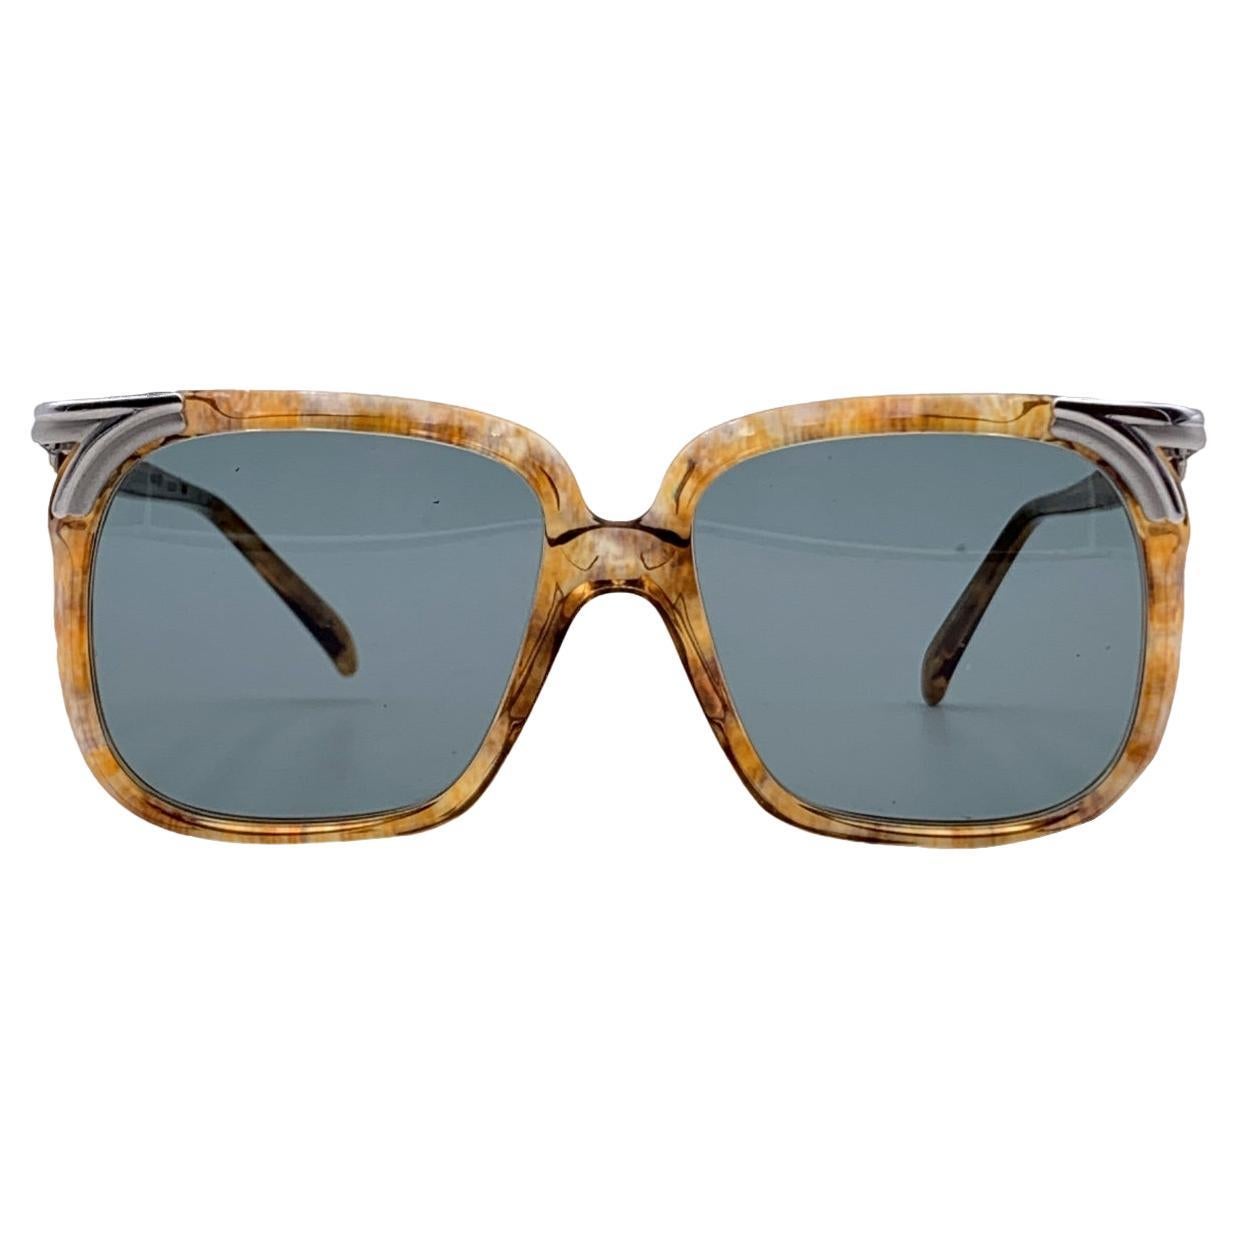 Cazal Vintage Brown Sunglasses Mod. 112 Col. 69 52/16 130 mm